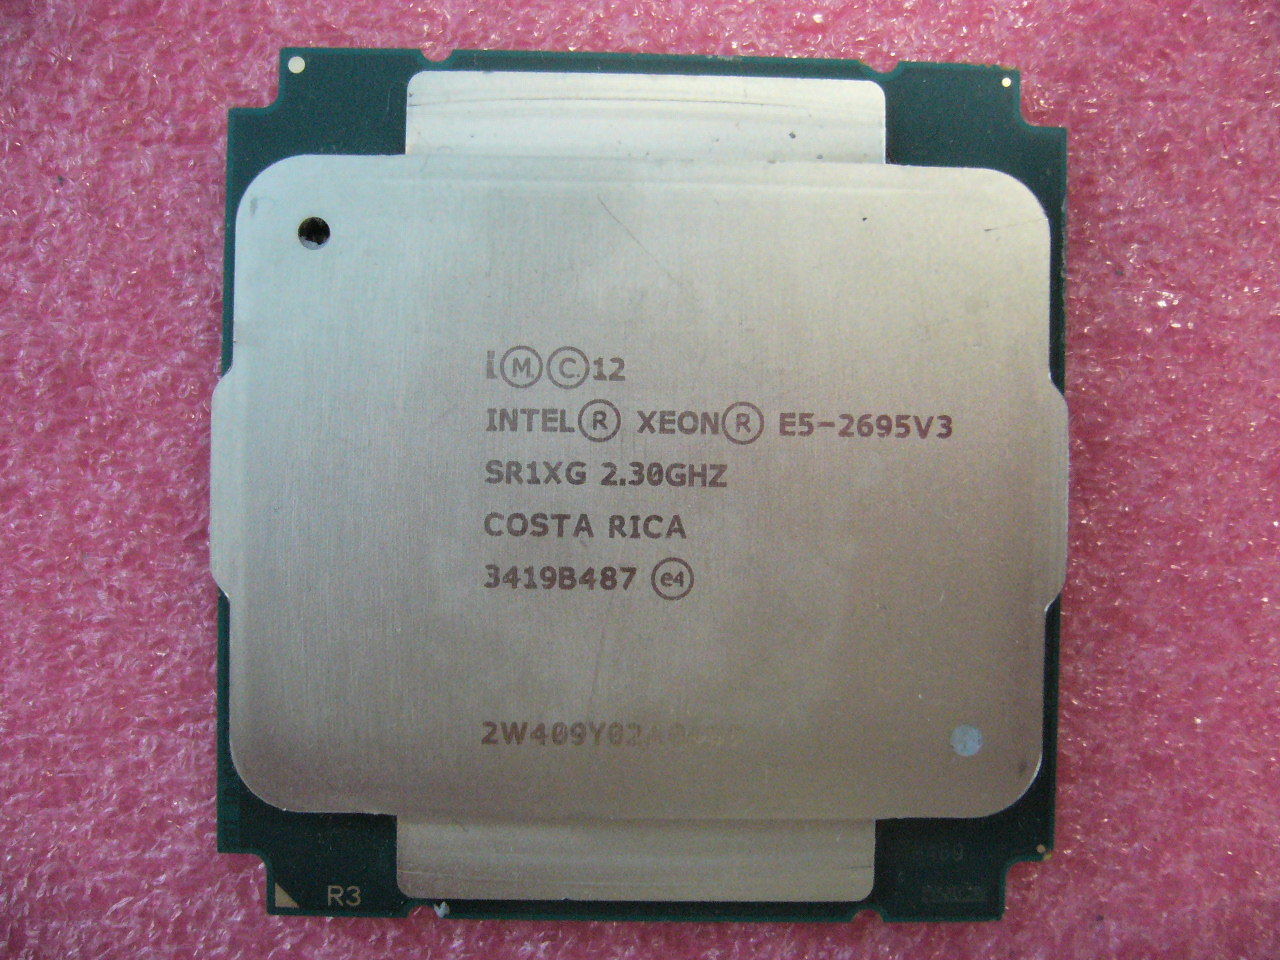 QTY 1x Intel E5-2695 V3 Xeon CPU 14-Cores 2.3Ghz 35MB Cache LGA2011 SR1XG - zum Schließen ins Bild klicken